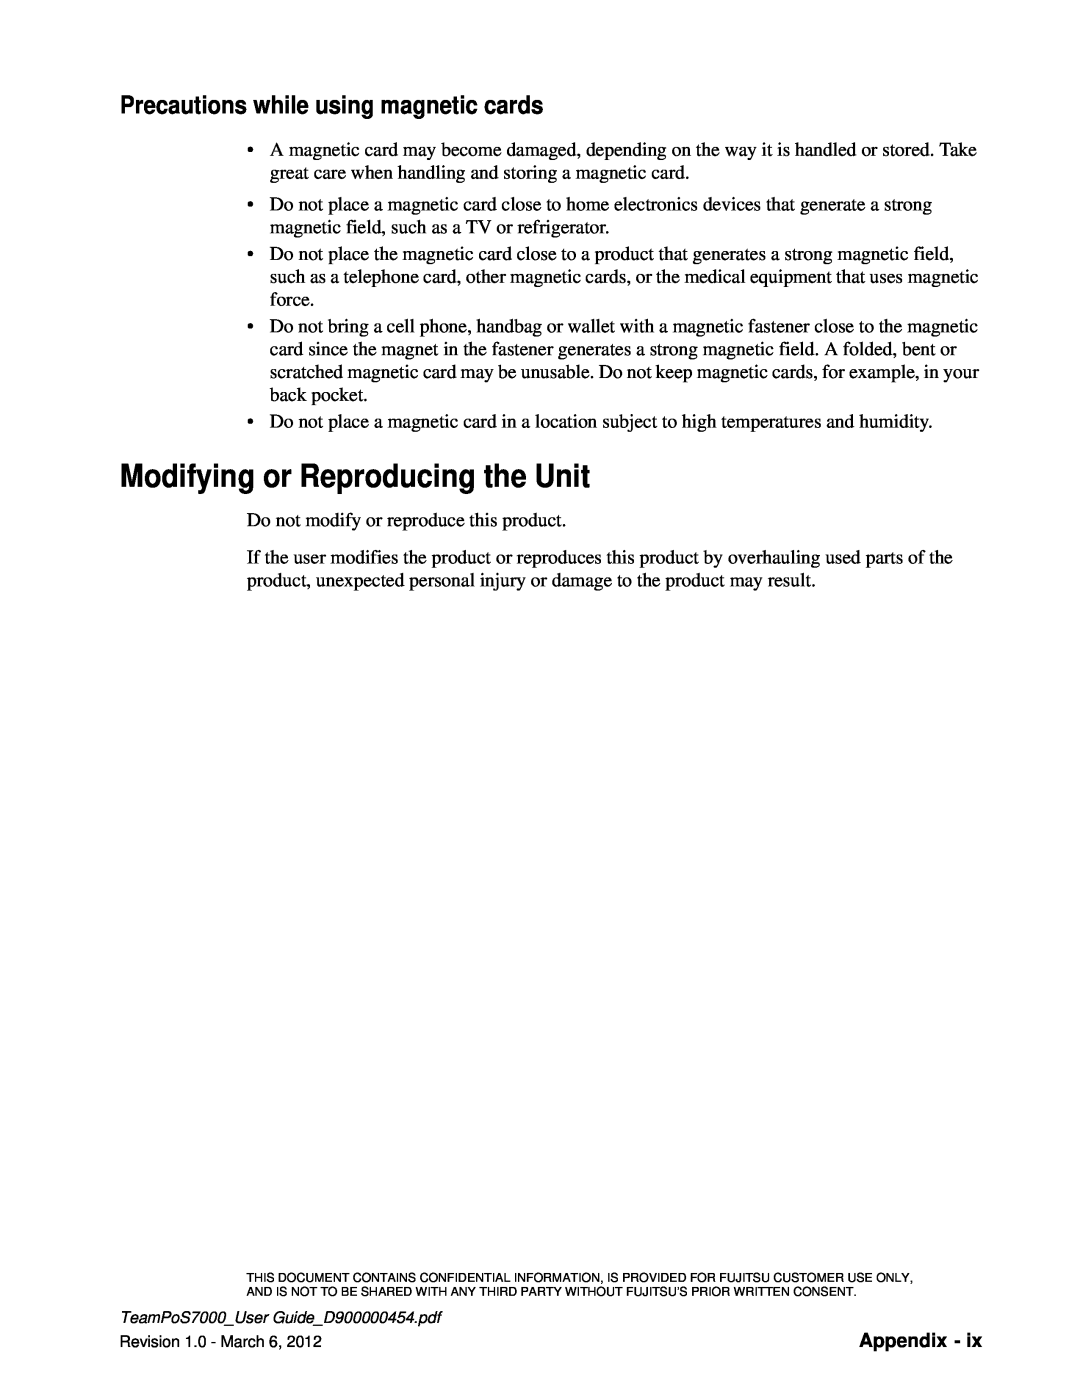 Fujitsu 7000 manual Modifying or Reproducing the Unit, Precautions while using magnetic cards, Appendix 